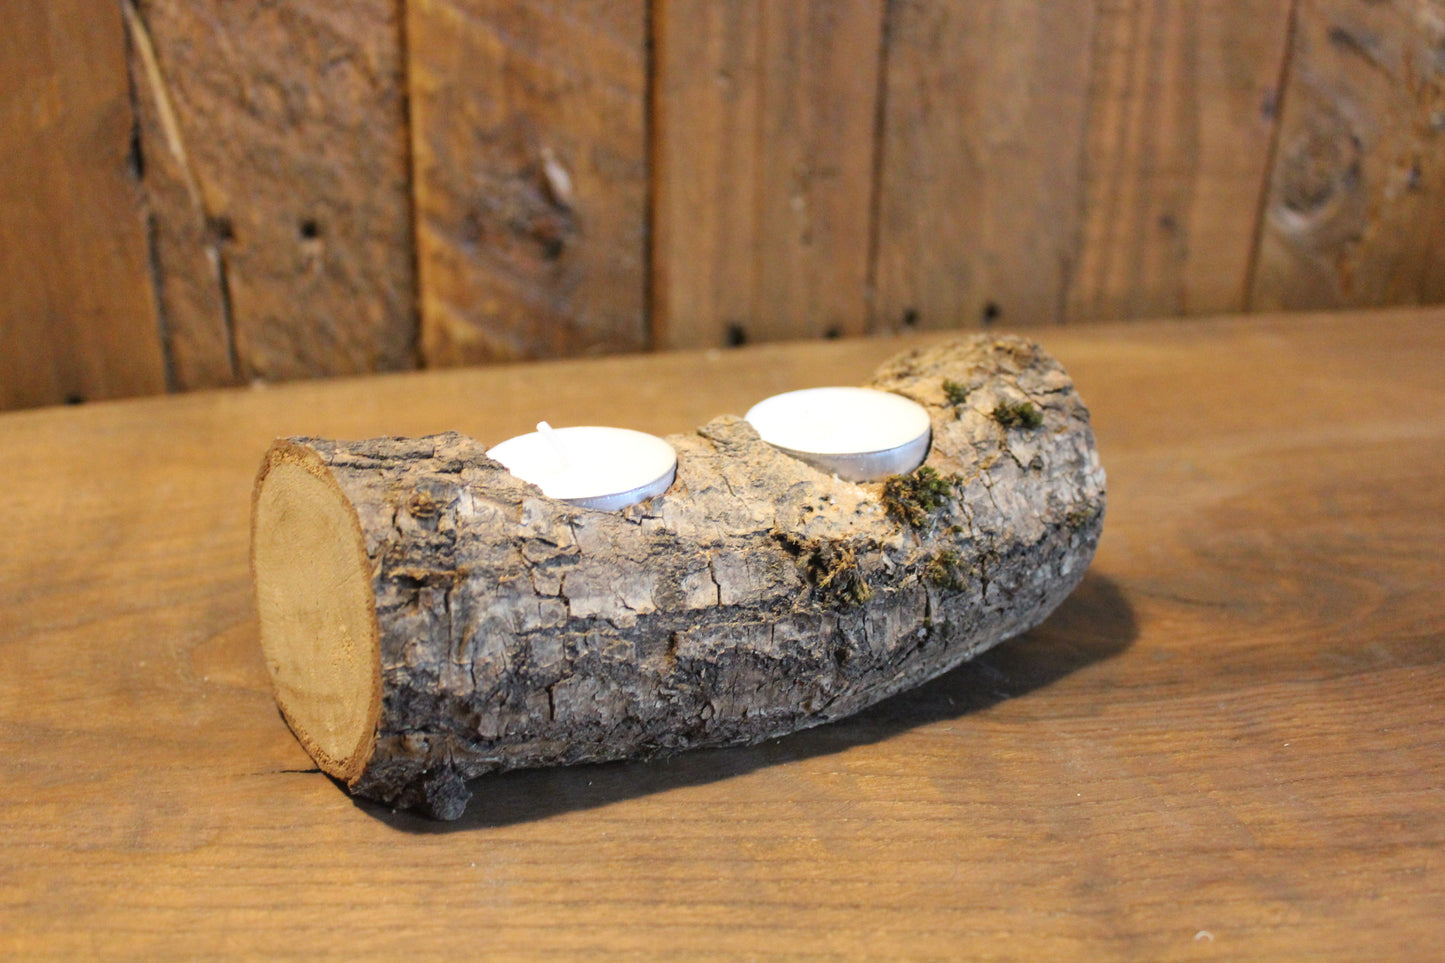 Oak Tealight Candle Holder - holds 2